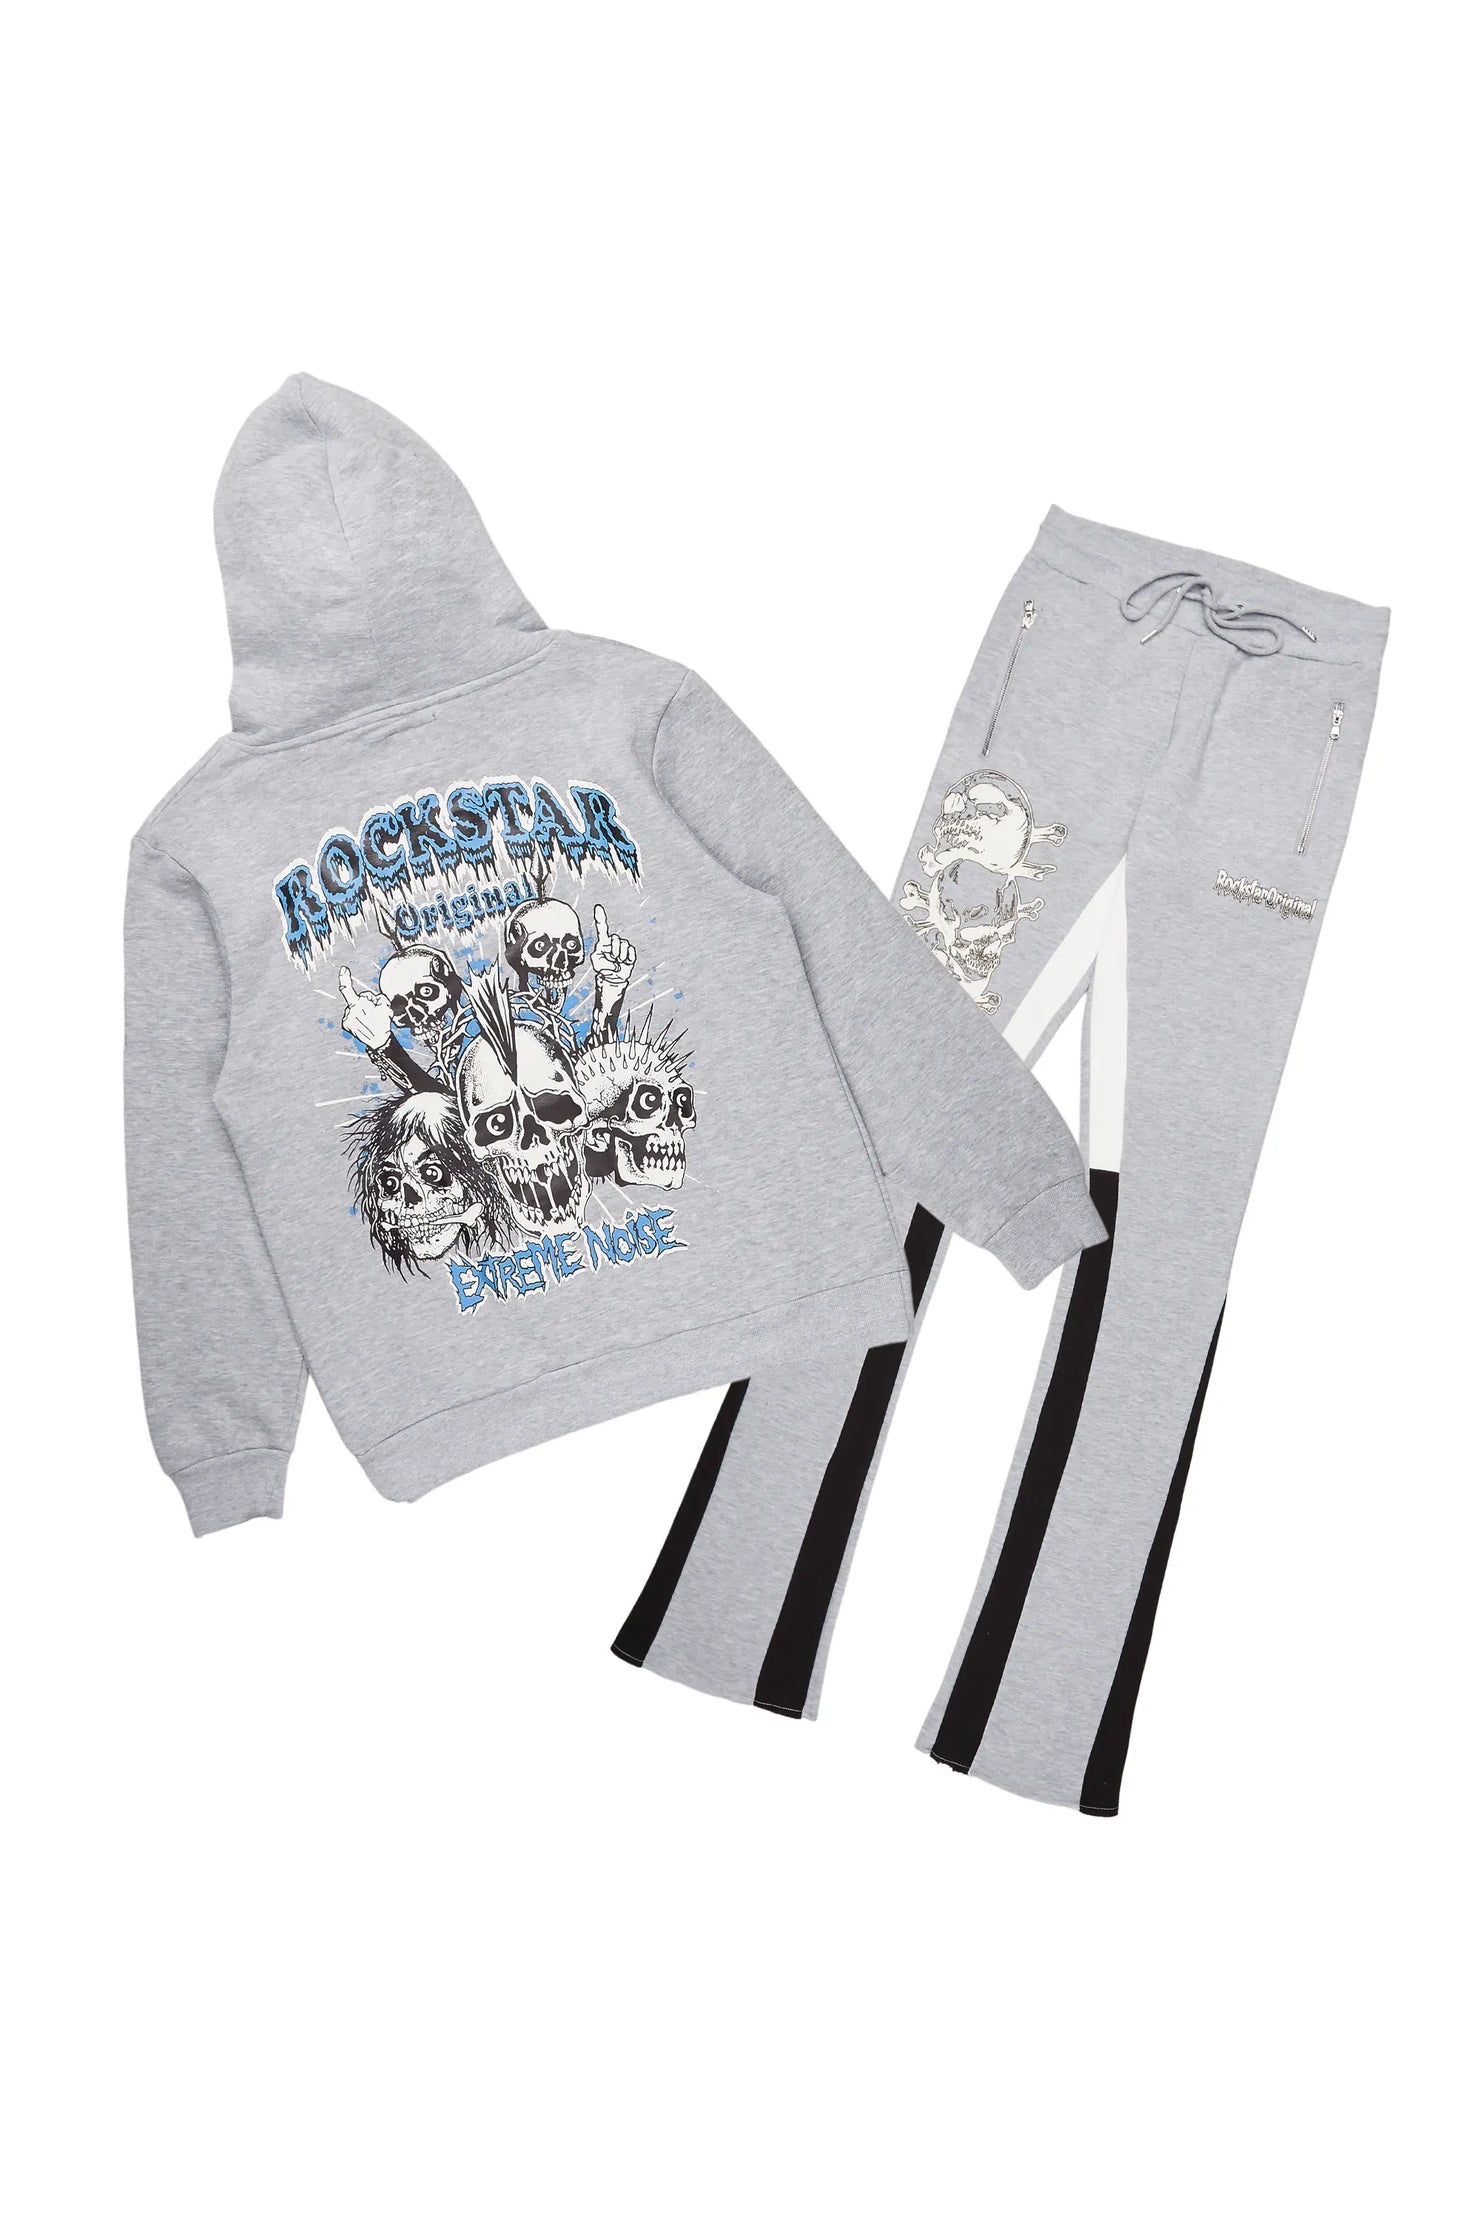 Grey/Black Hoodie/Stacked Graphic Set– Rockstar Tabor Track Pant Original Flare Heather